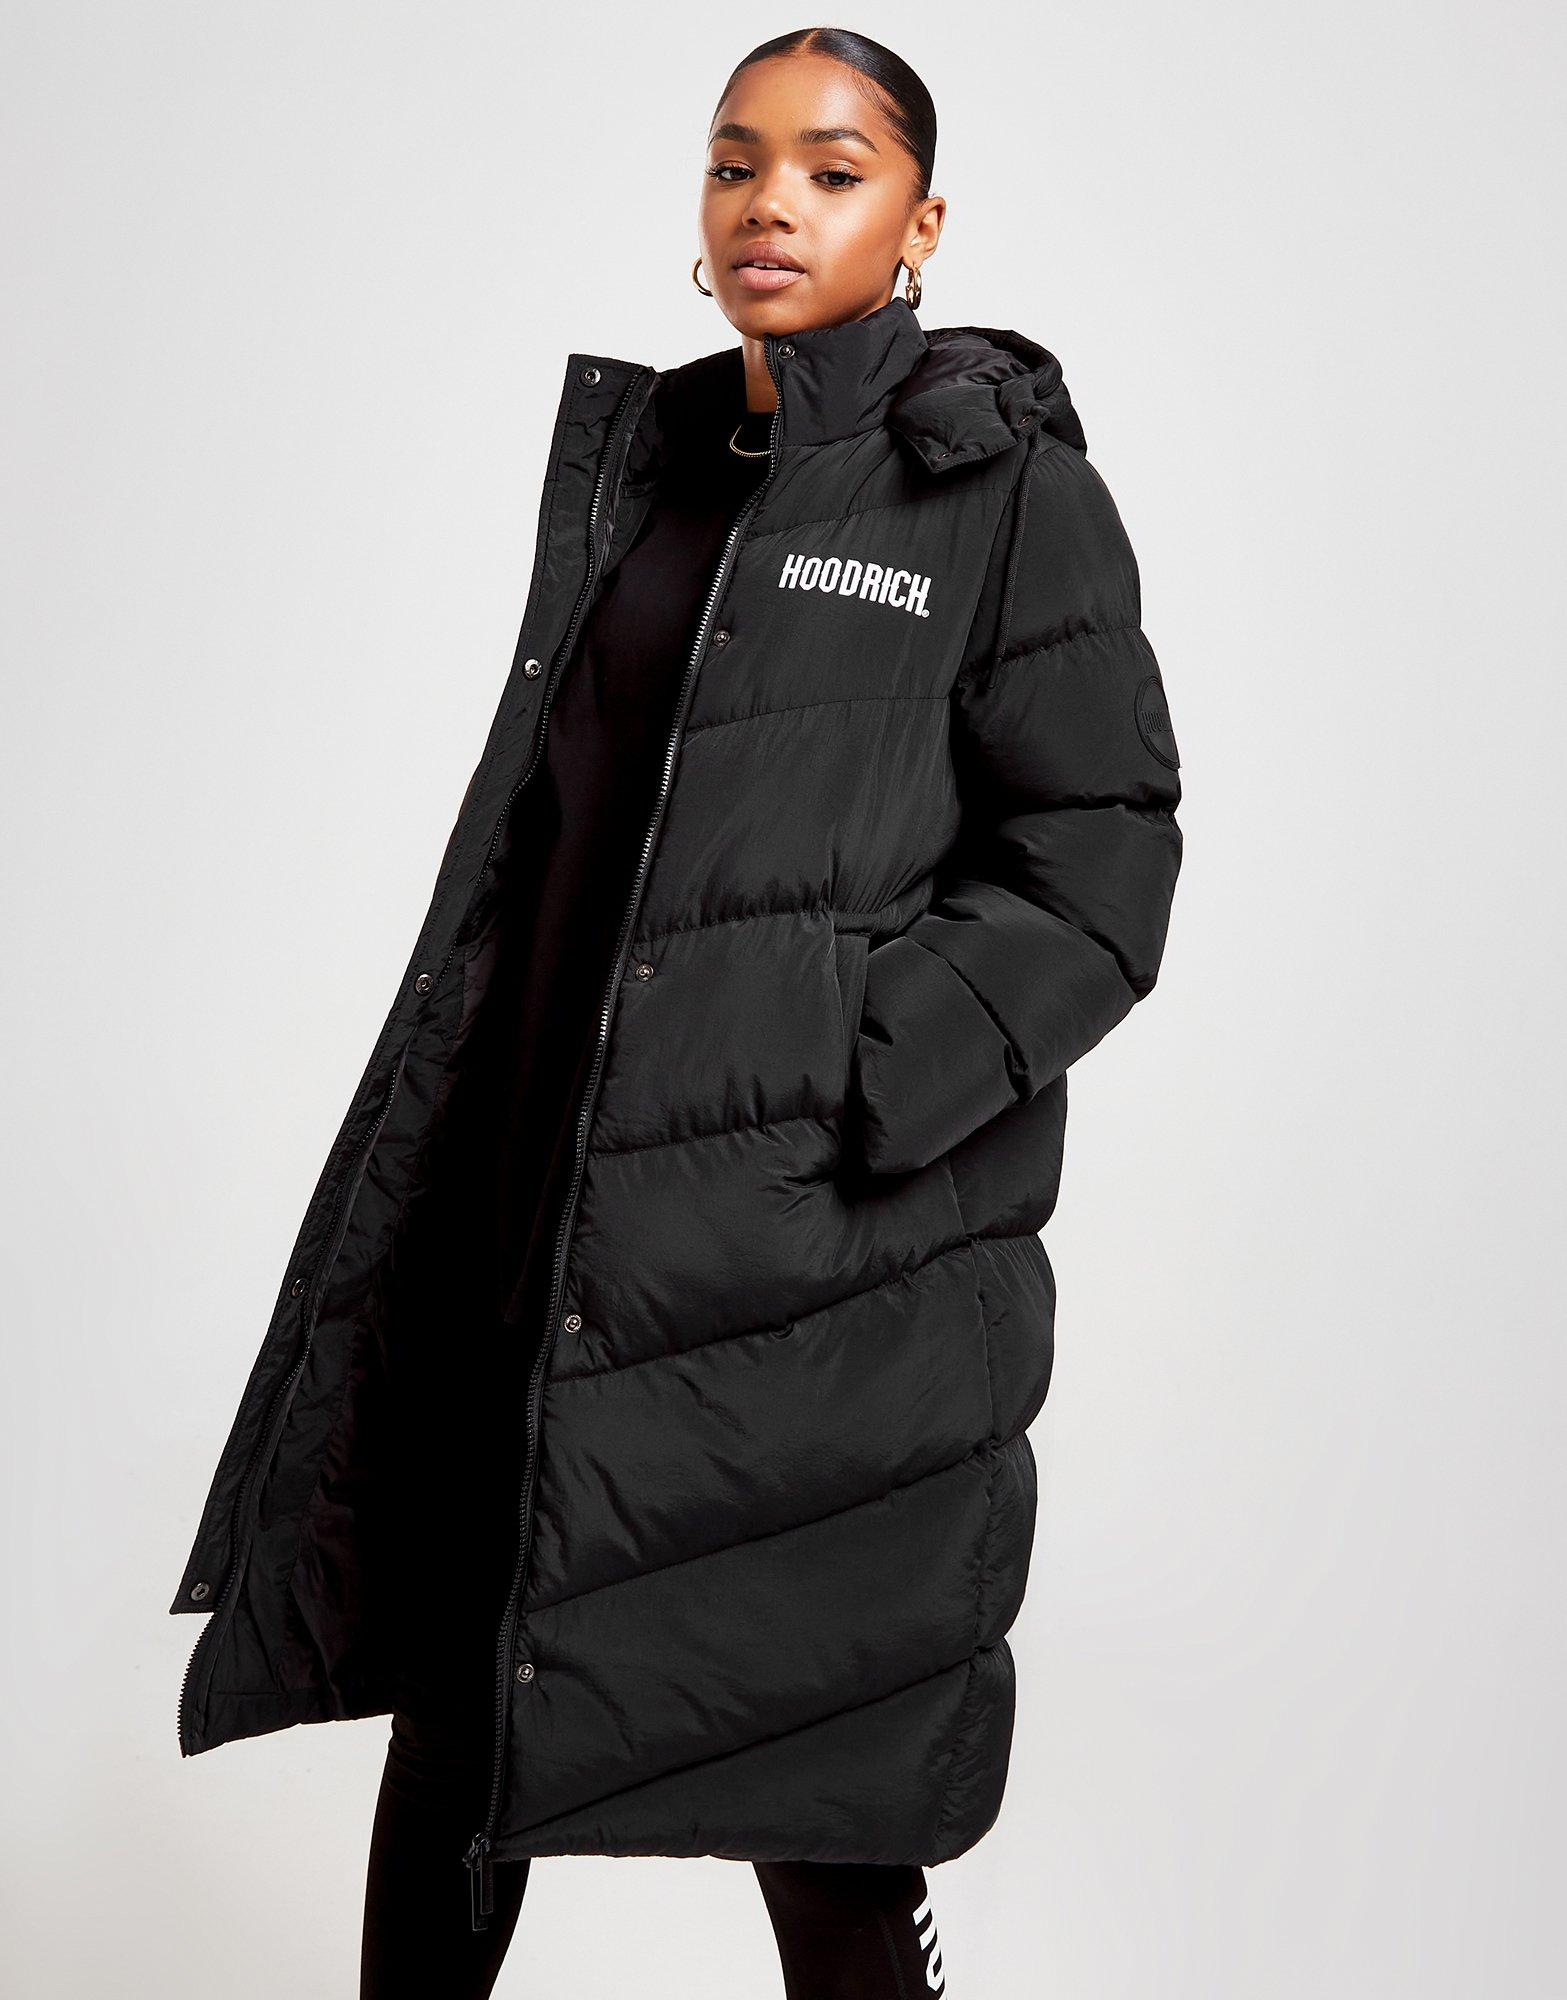 Short jacket in black mink fur horizontal 44 sleeve long hood outer pockets